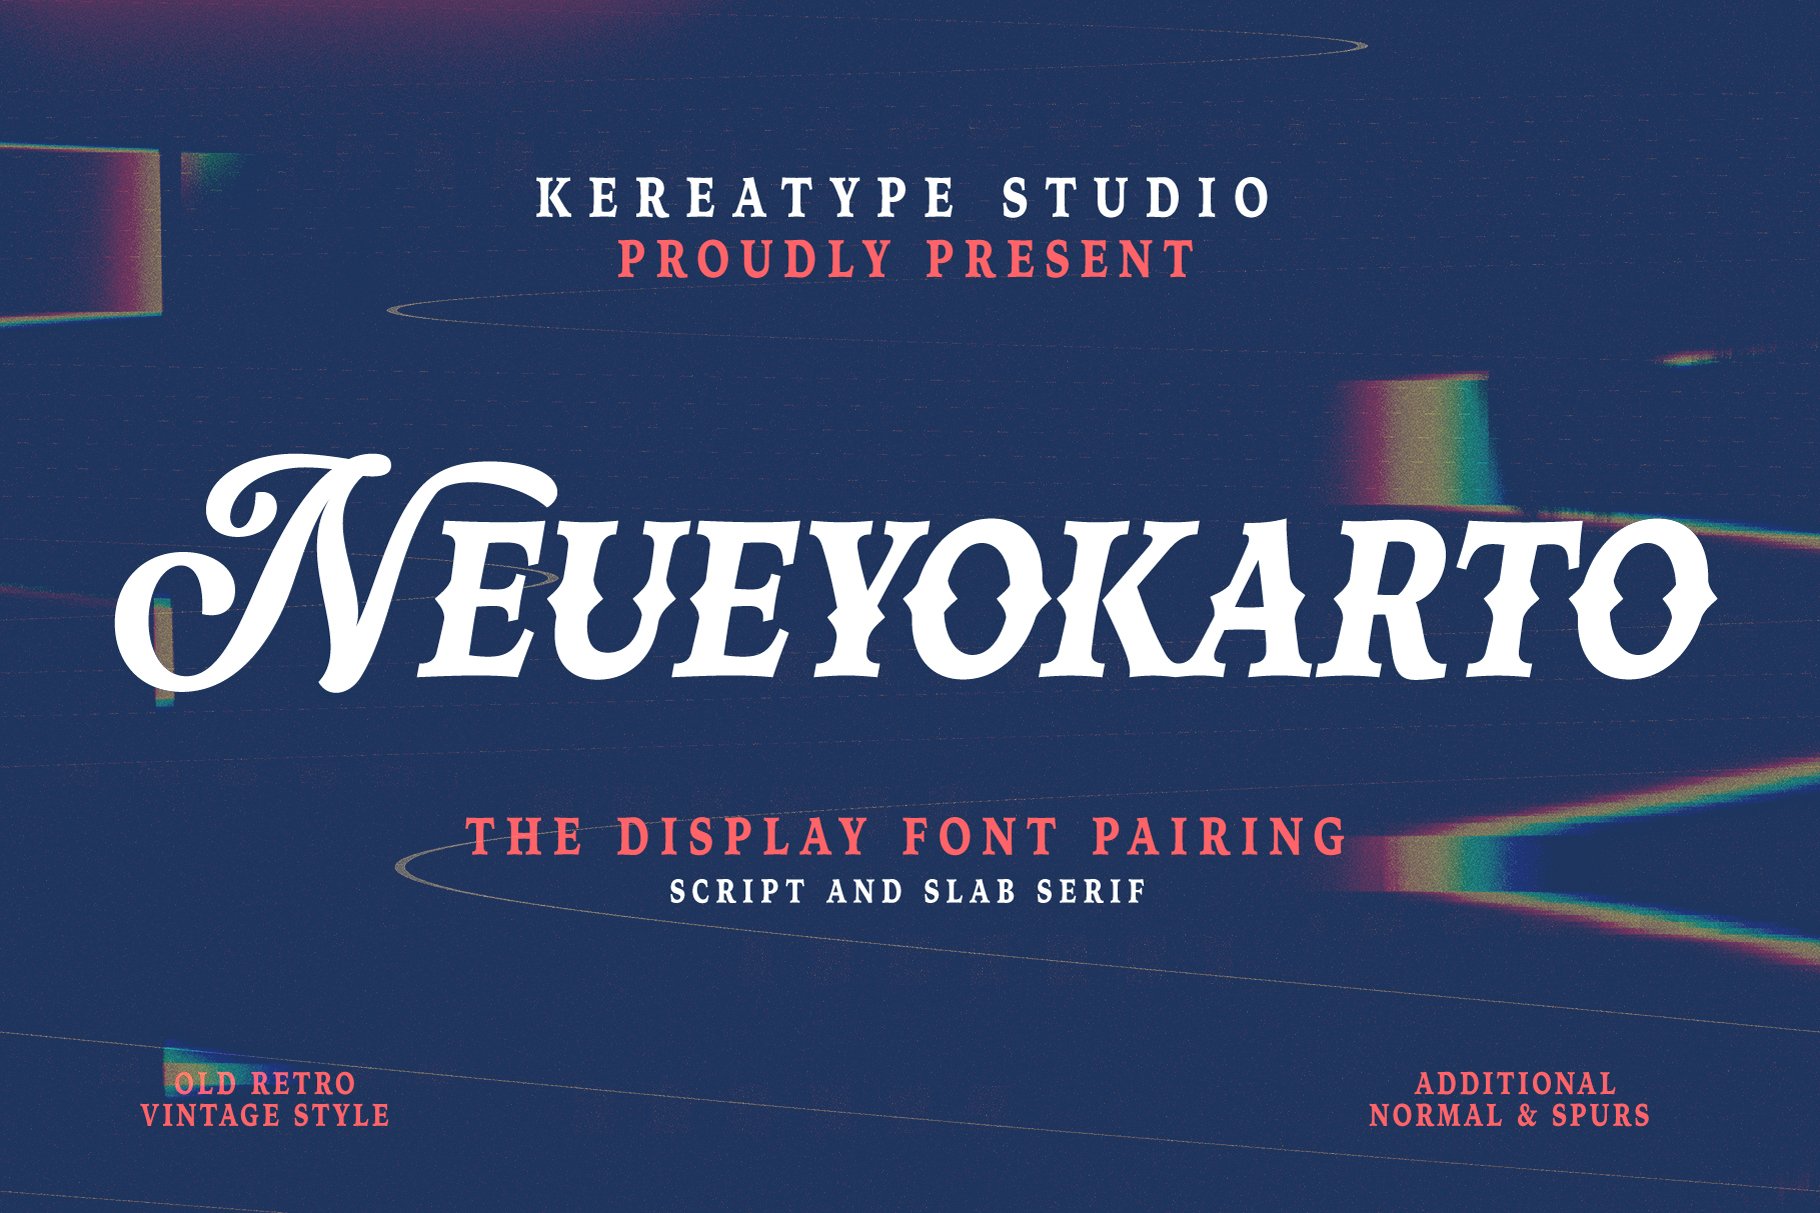 Neue Yokarto - Vintage Pair Font cover image.